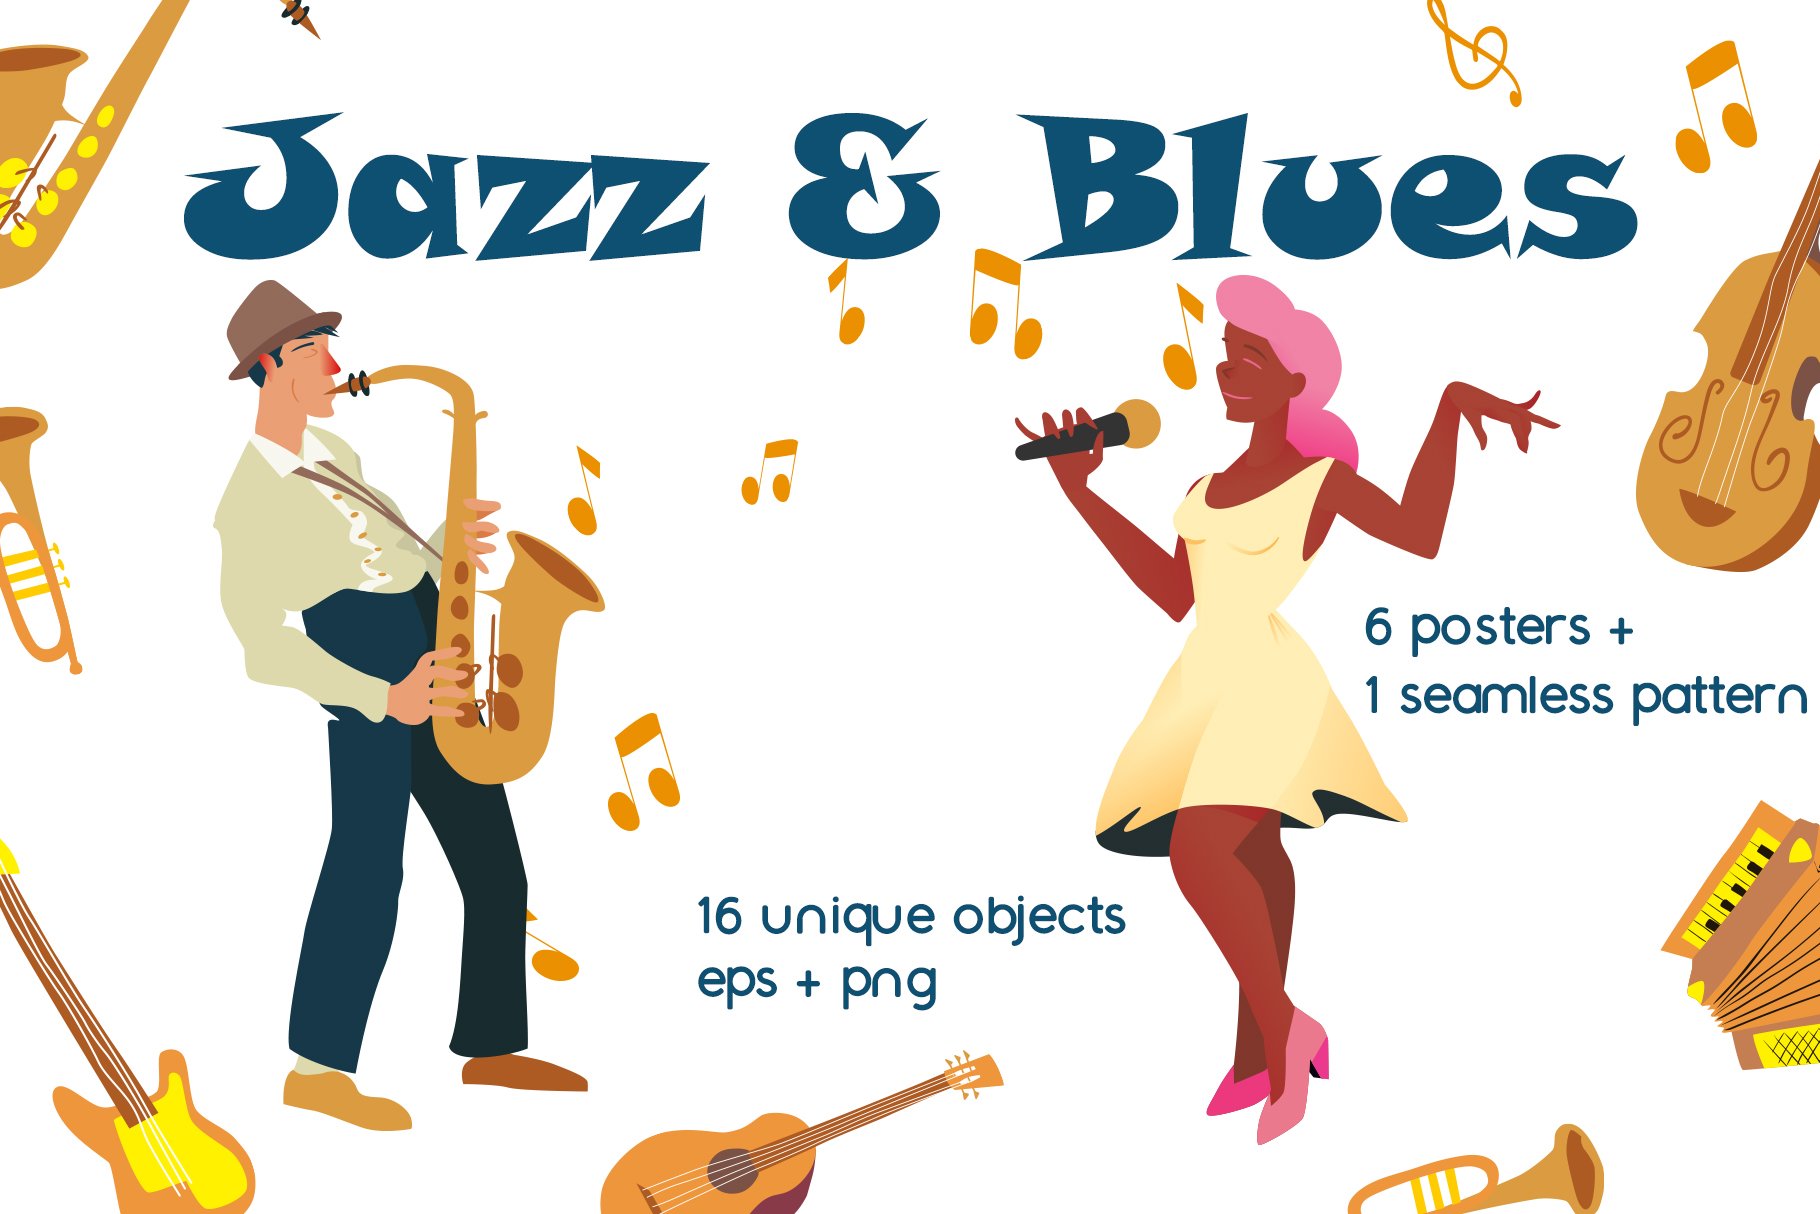 Jazz & blues cover image.